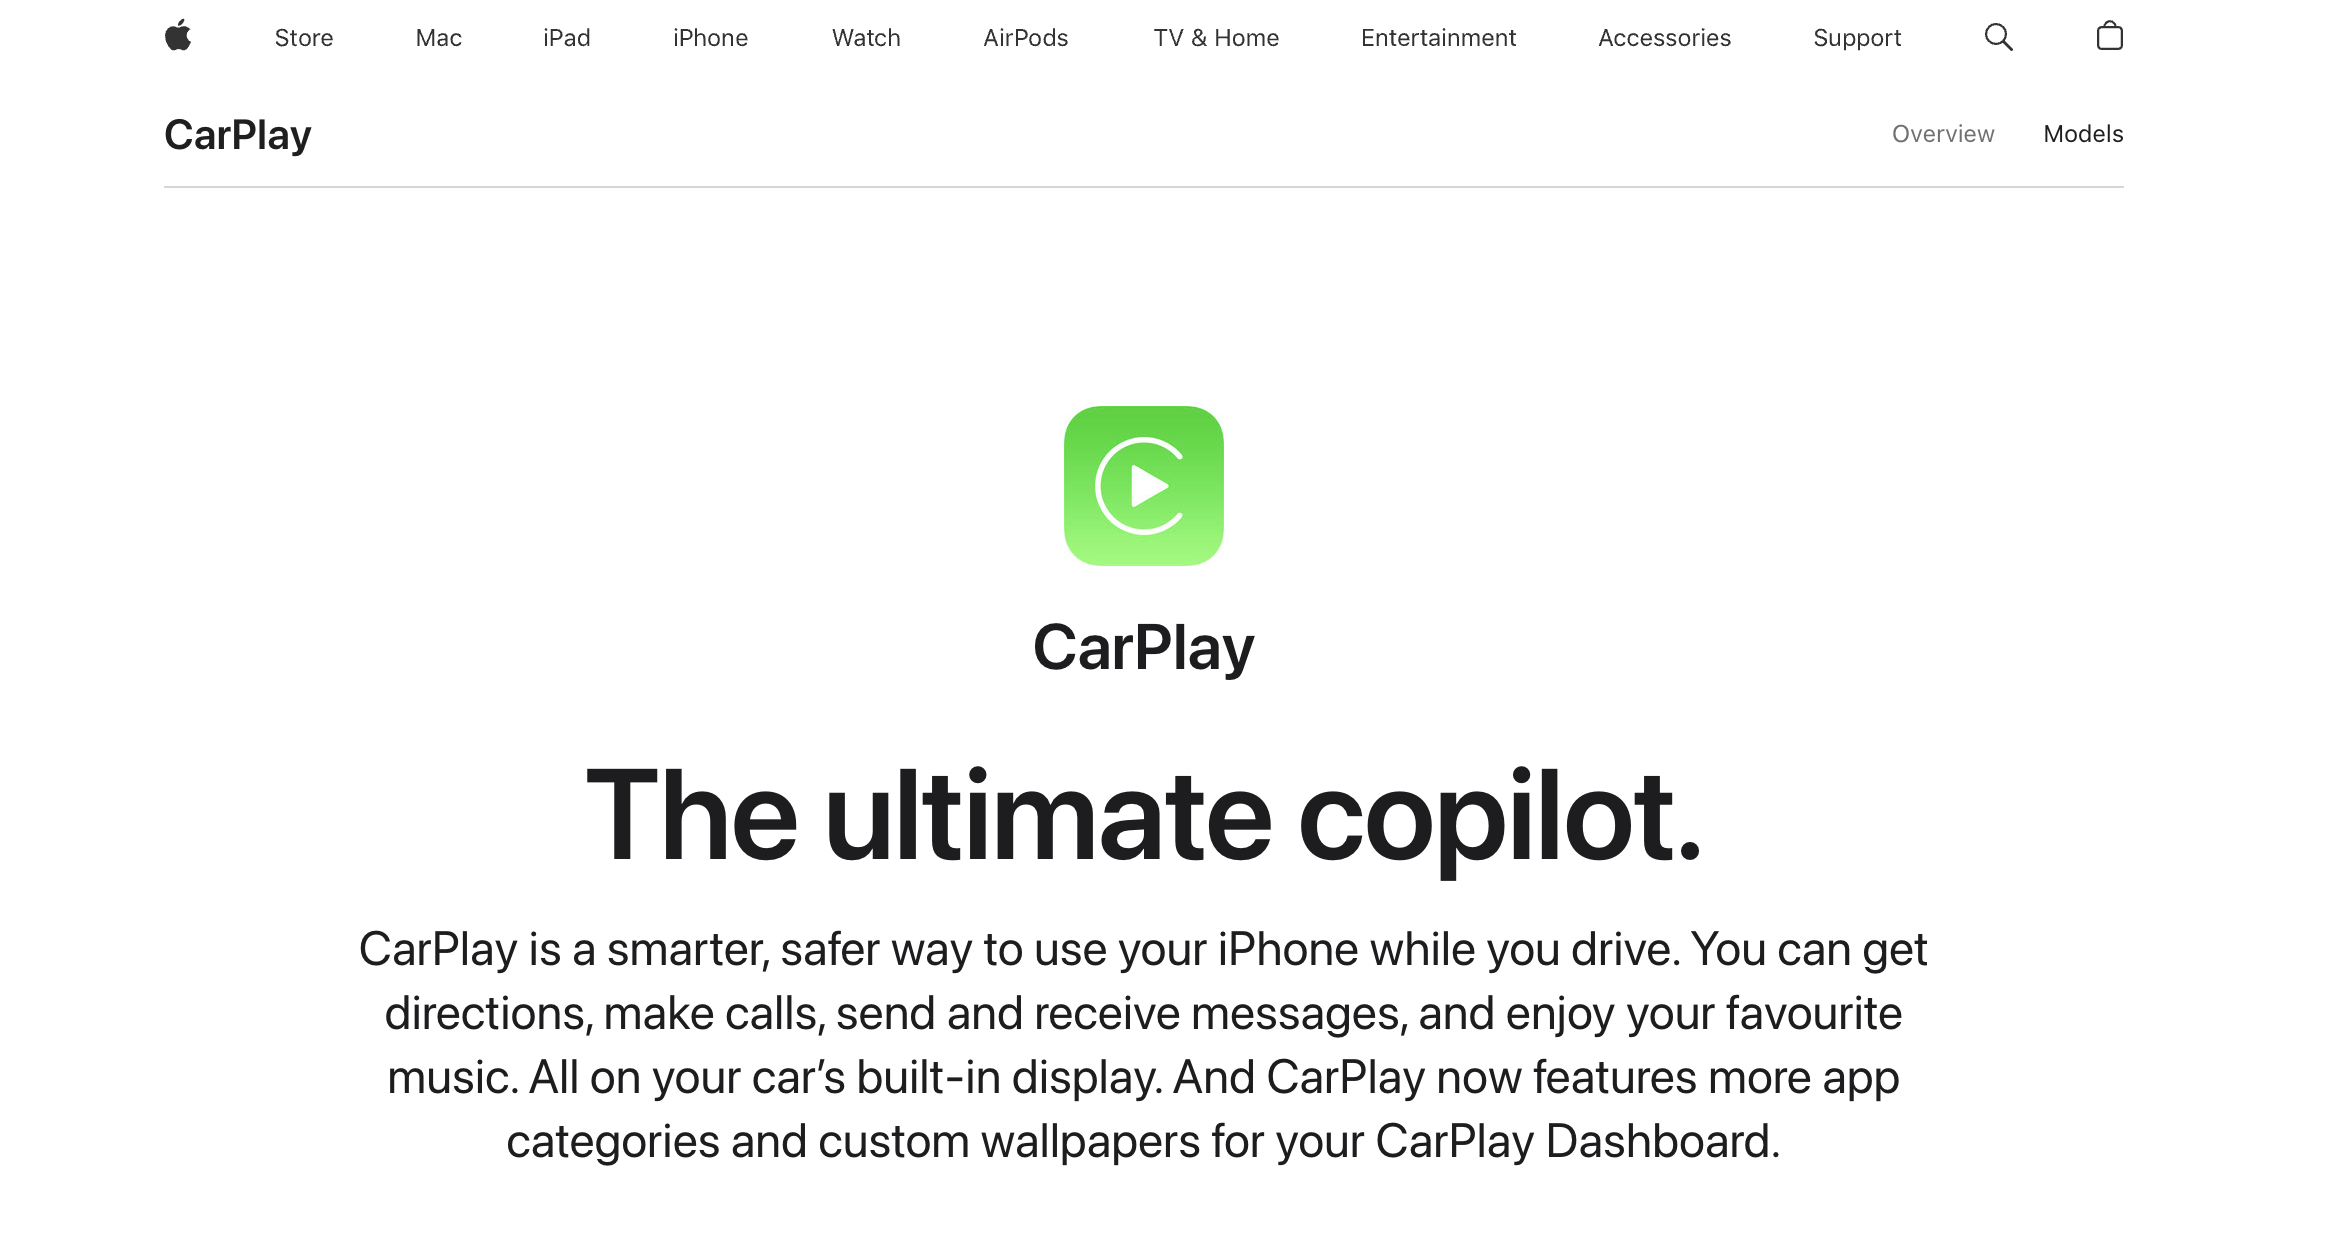 About Apple CarPlay